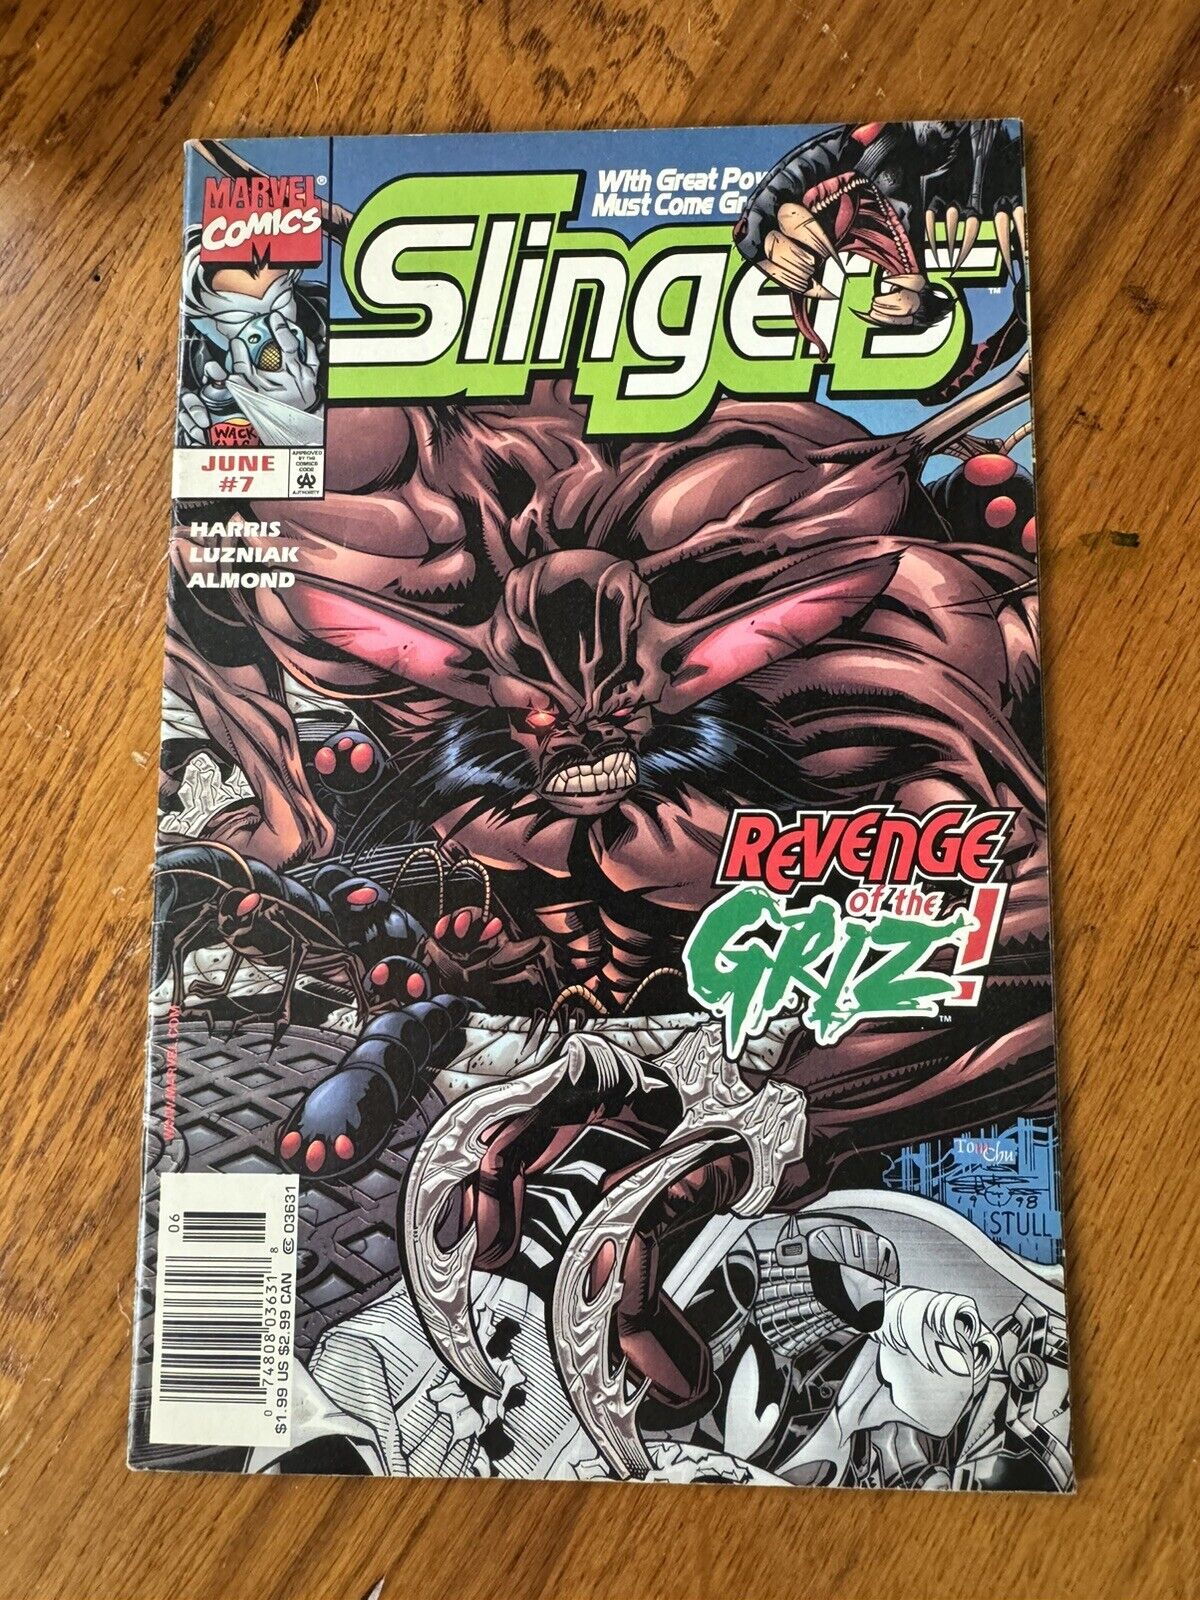 SLINGERS #7, Vol.1, Marvel Comics, 1999 - Bagged & Boarded